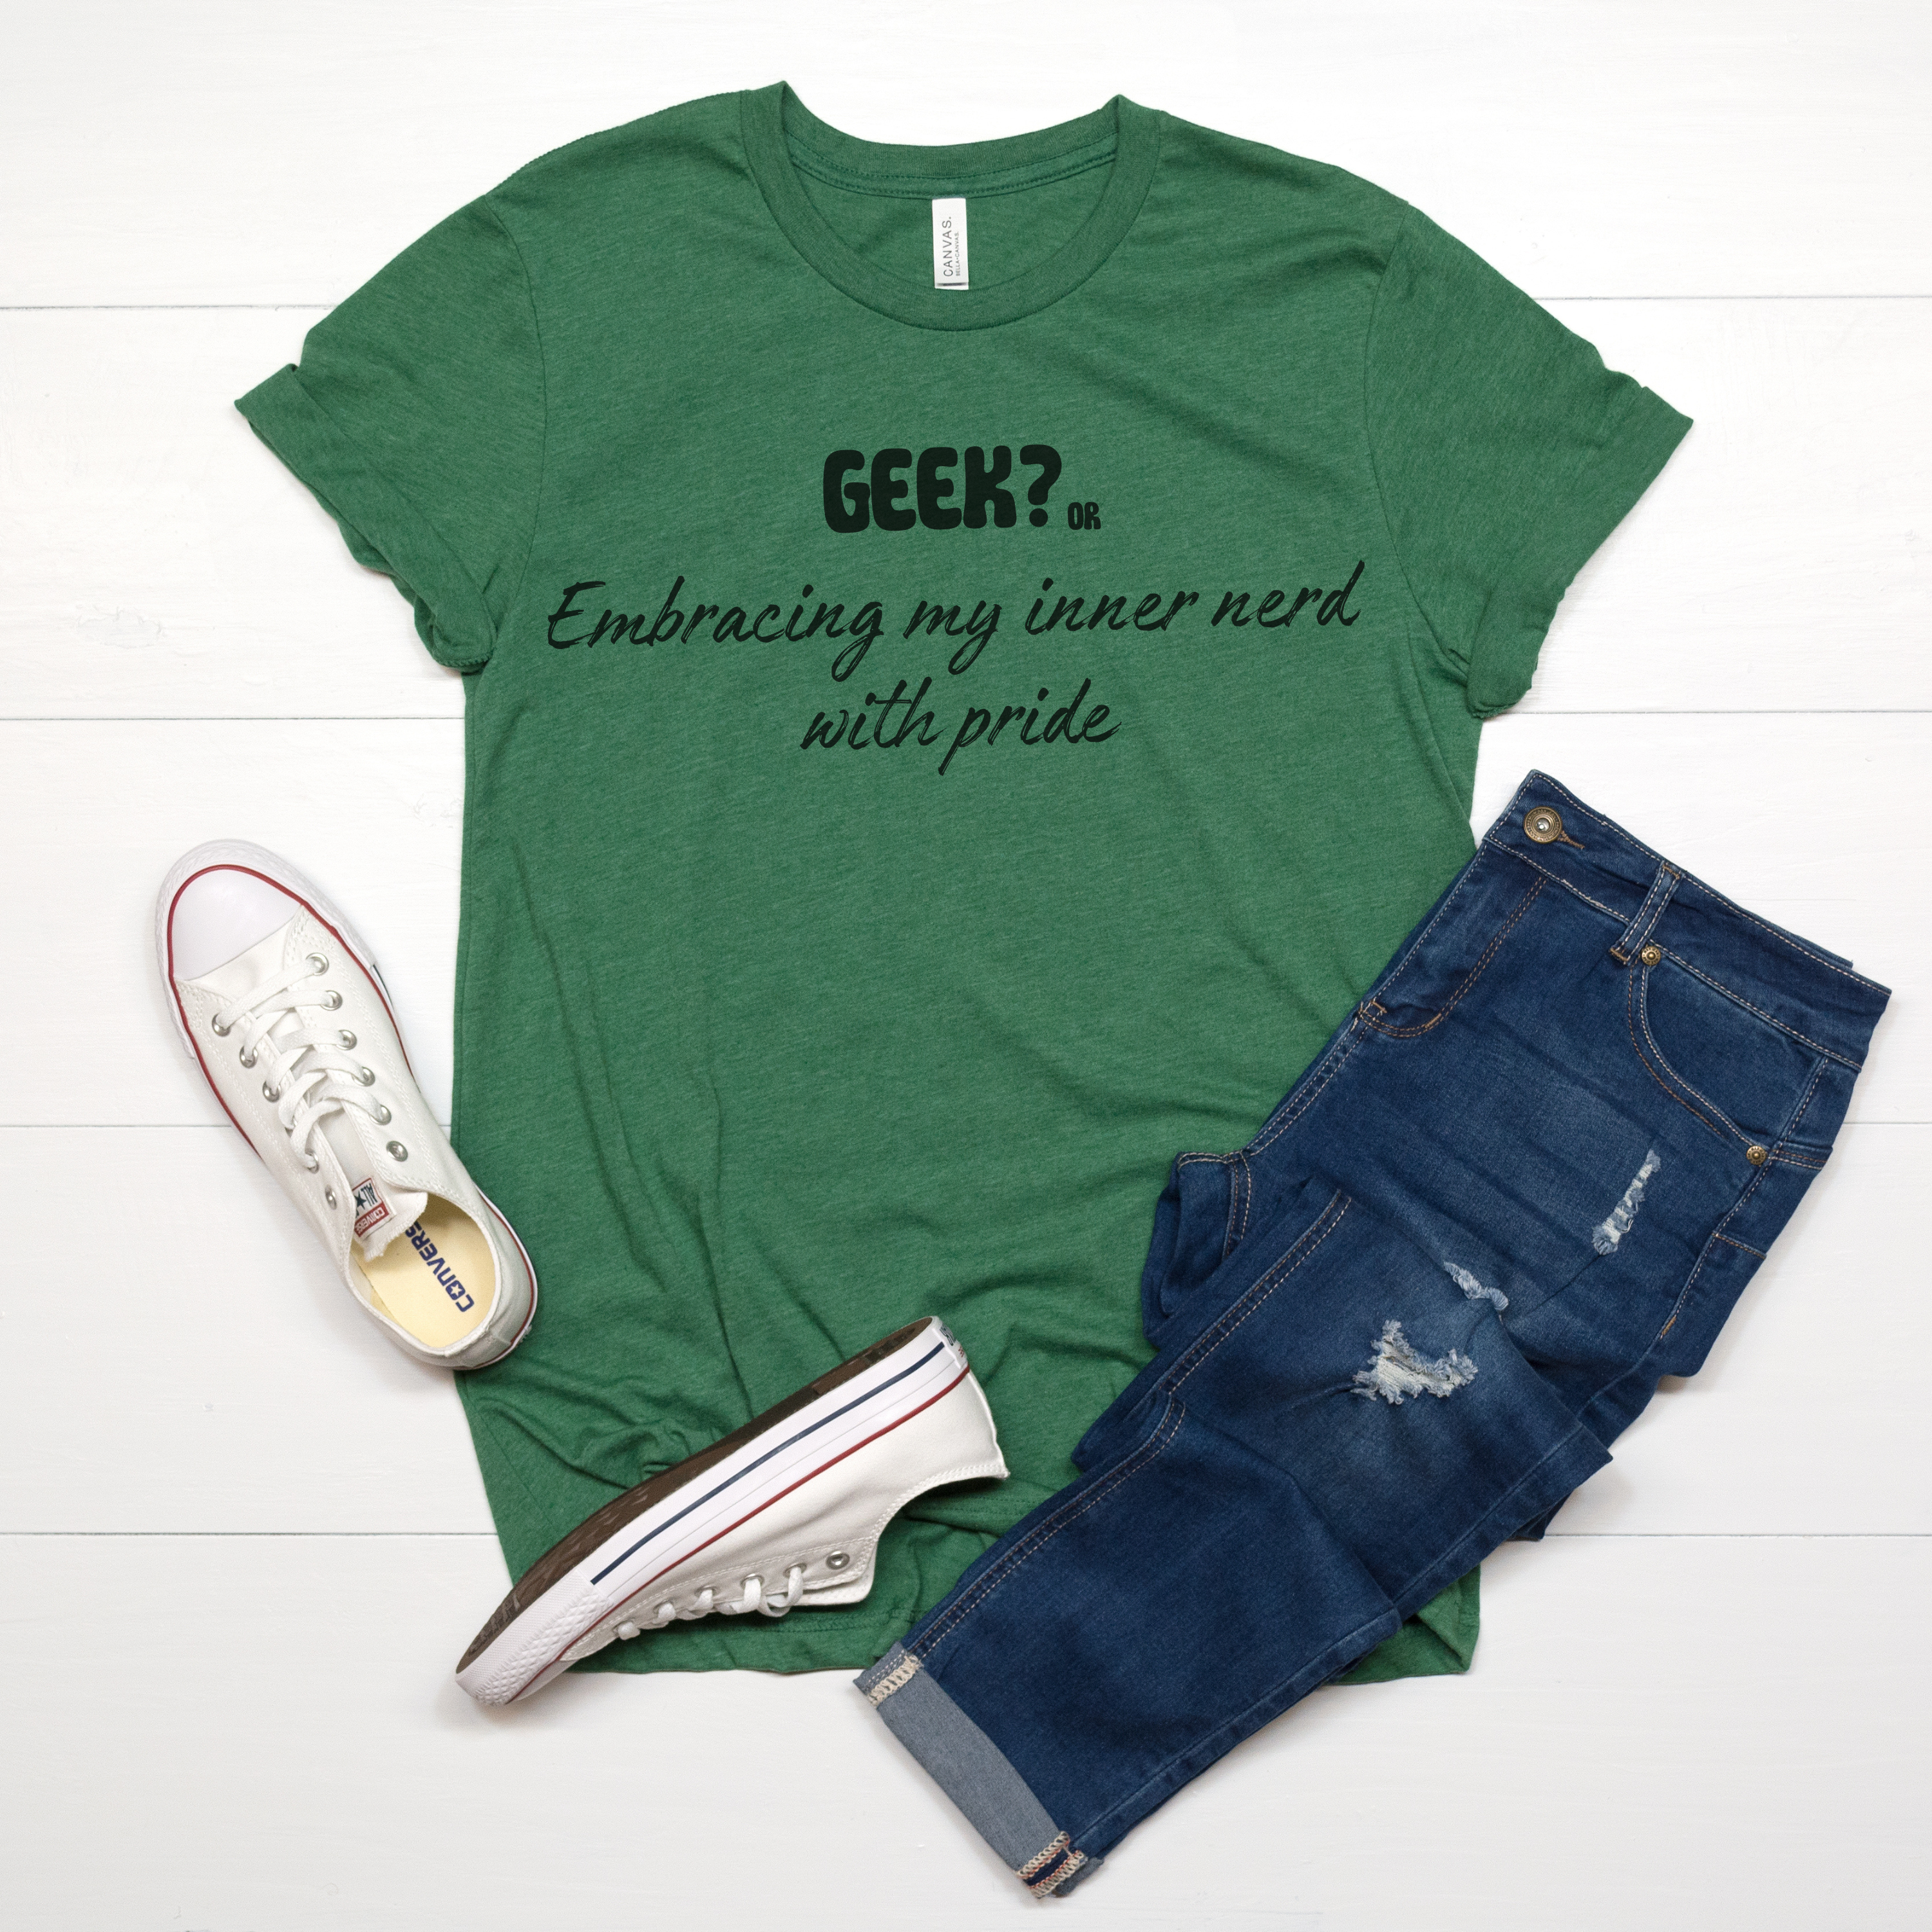 Geek? or Embracing my inner nerd with pride T-shirt